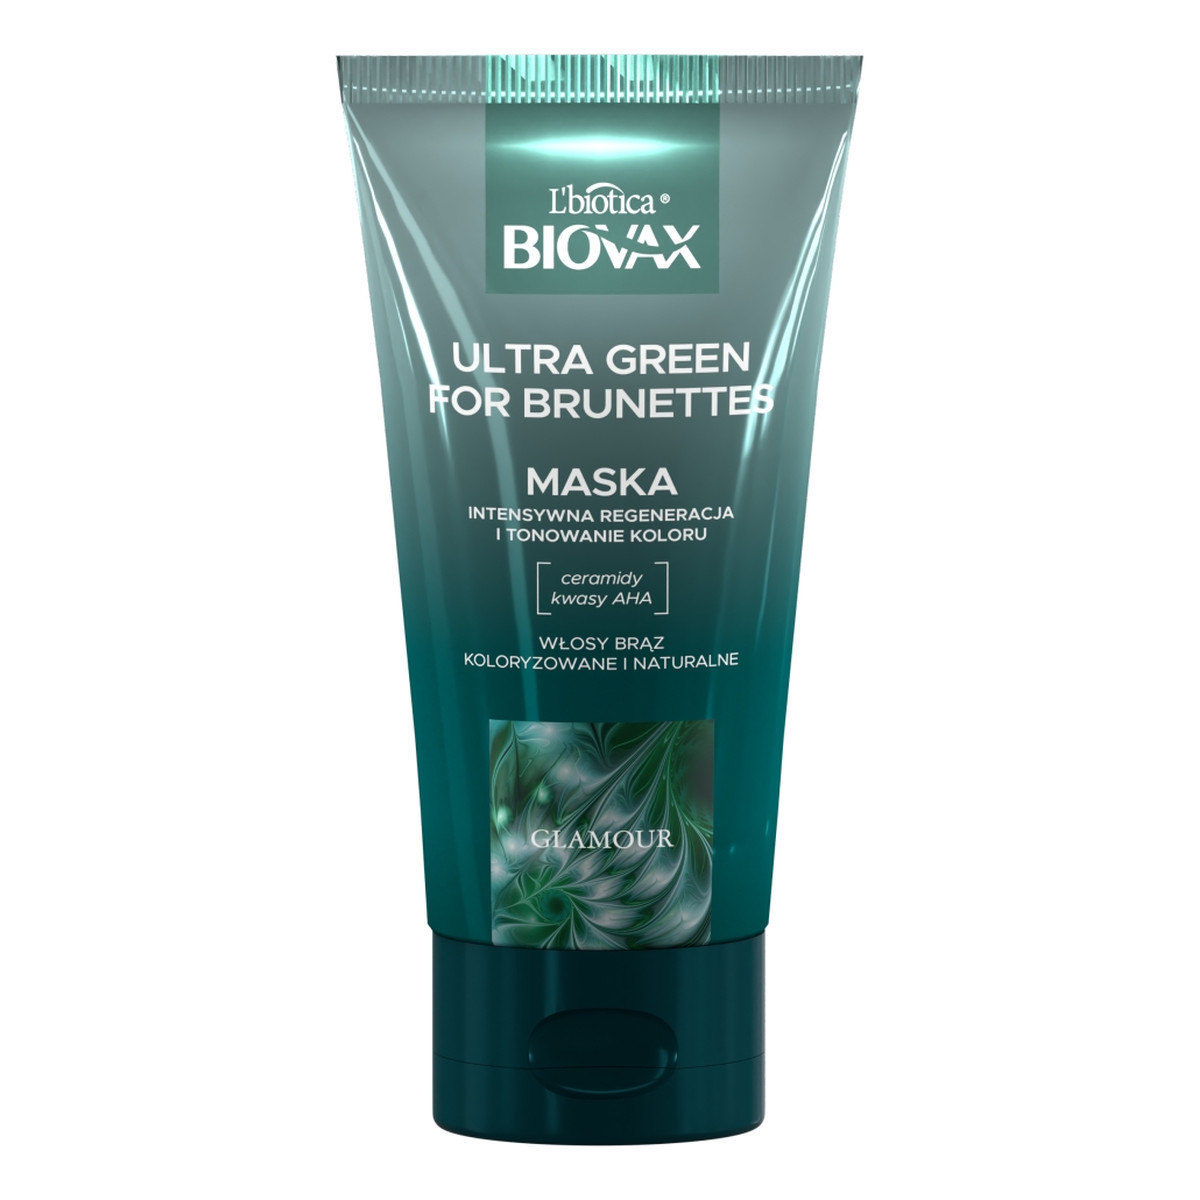 Biovax Glamour ultra green for brunettes maska do włosów dla brunetek 150ml